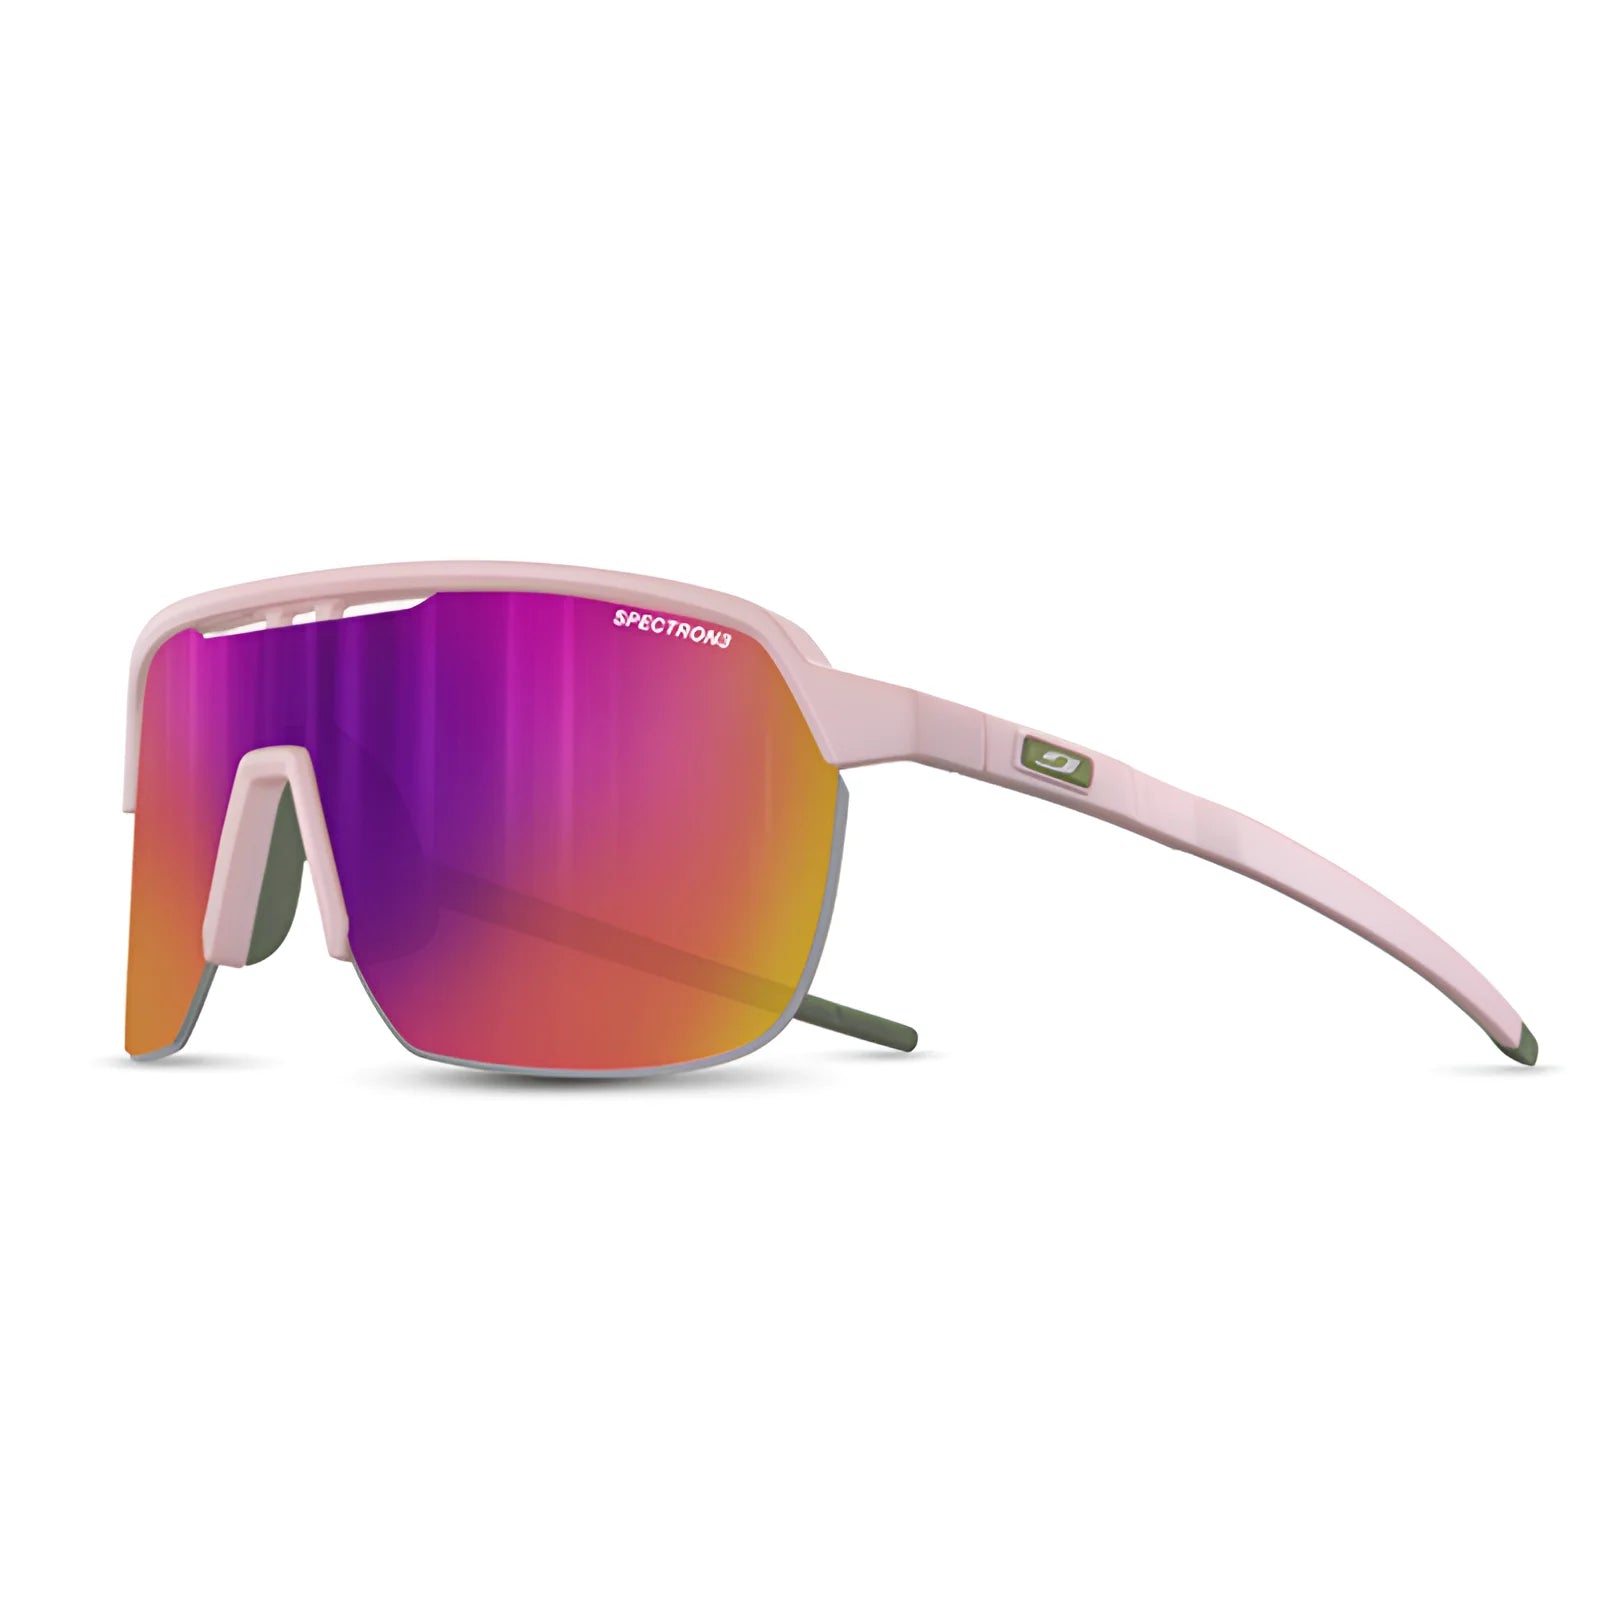 Julbo Frequency Sunglasses Pastel Pink / Green / Spectron 3 (VLT 13%)